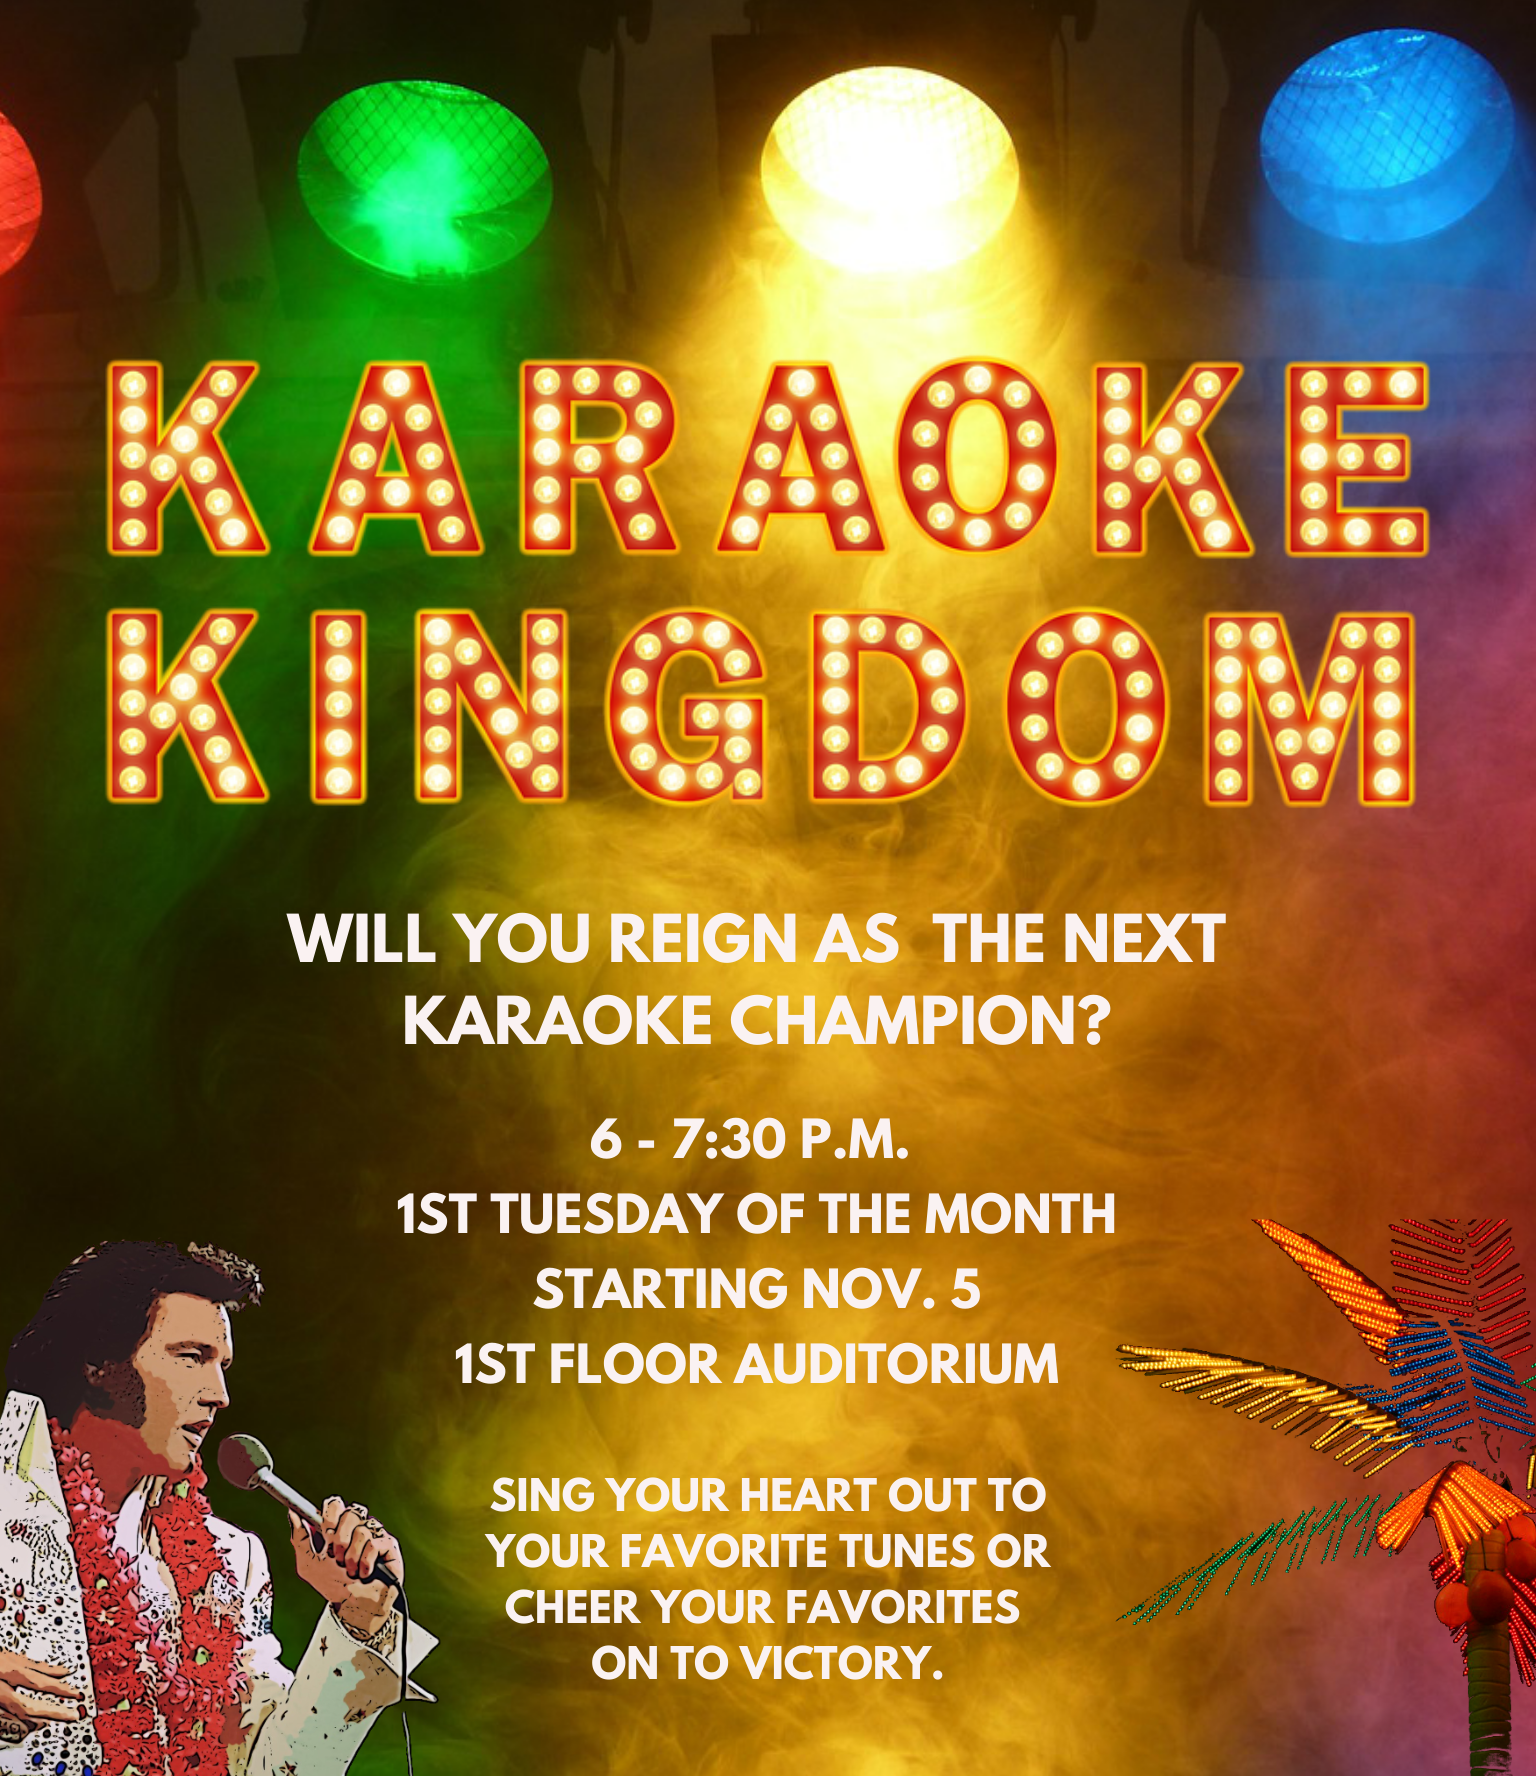 Karaoke Kingdom